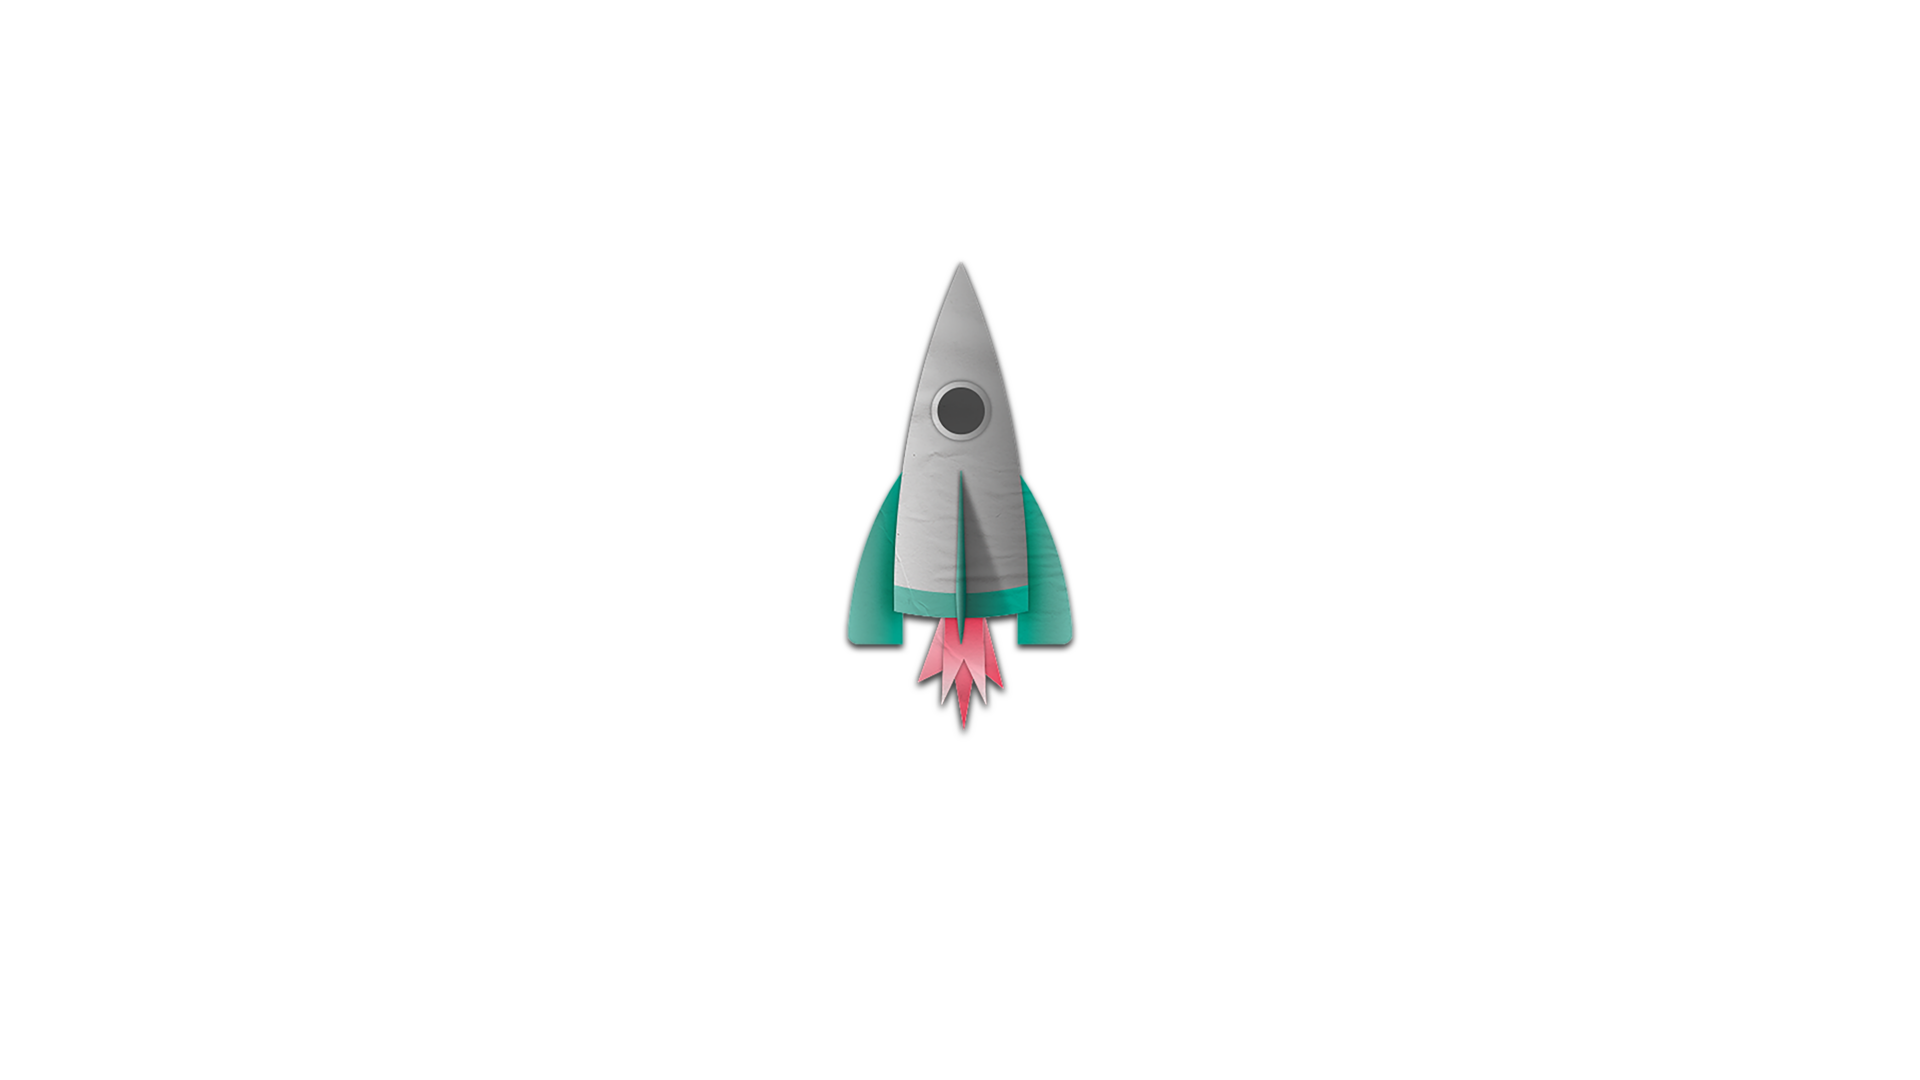 Rocket ship graphic art